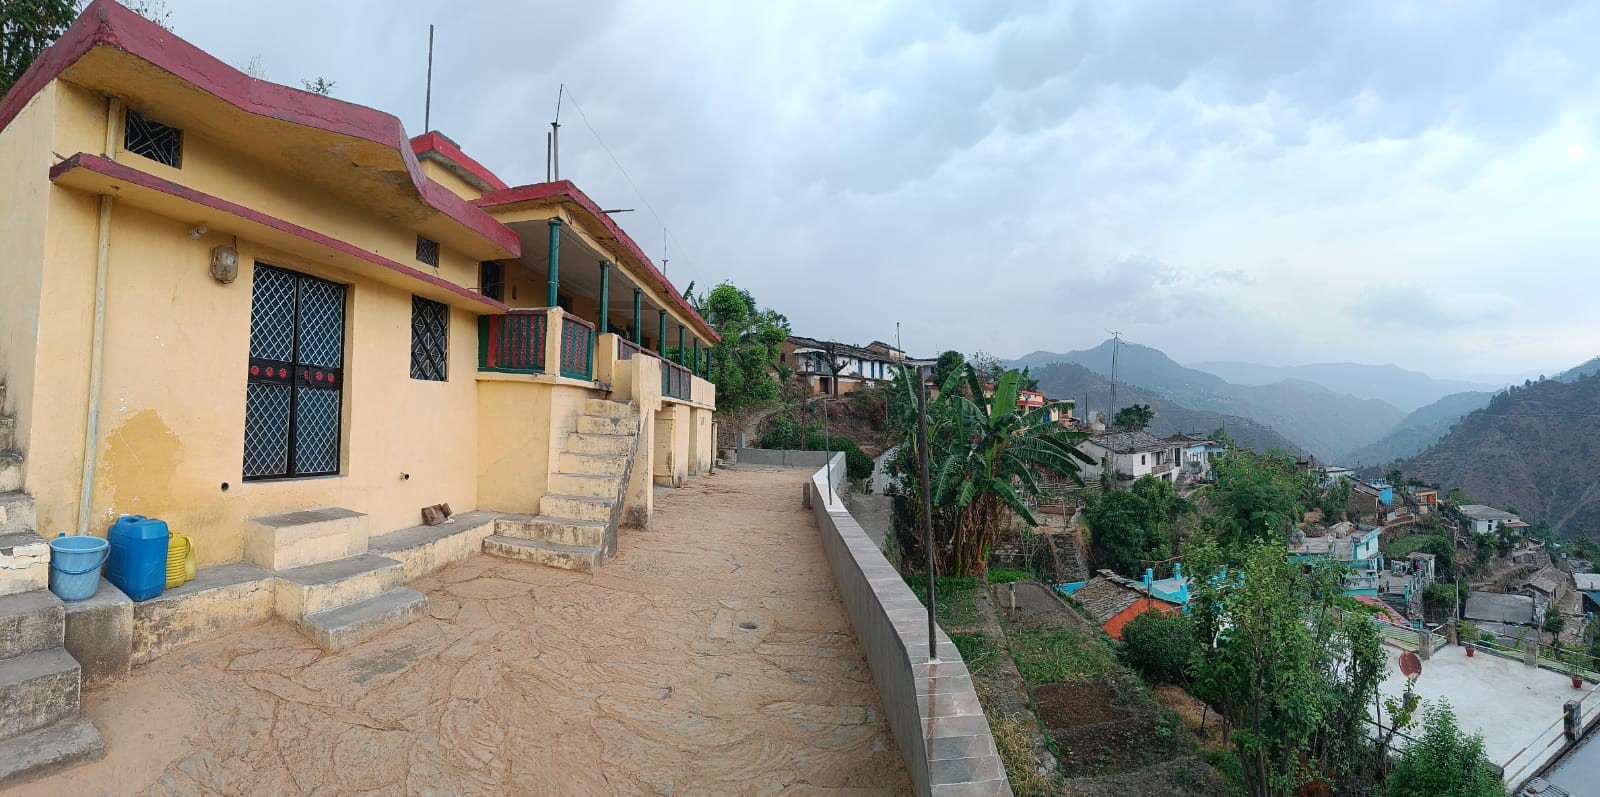 Bareth Malla village, Pauri Garhwal